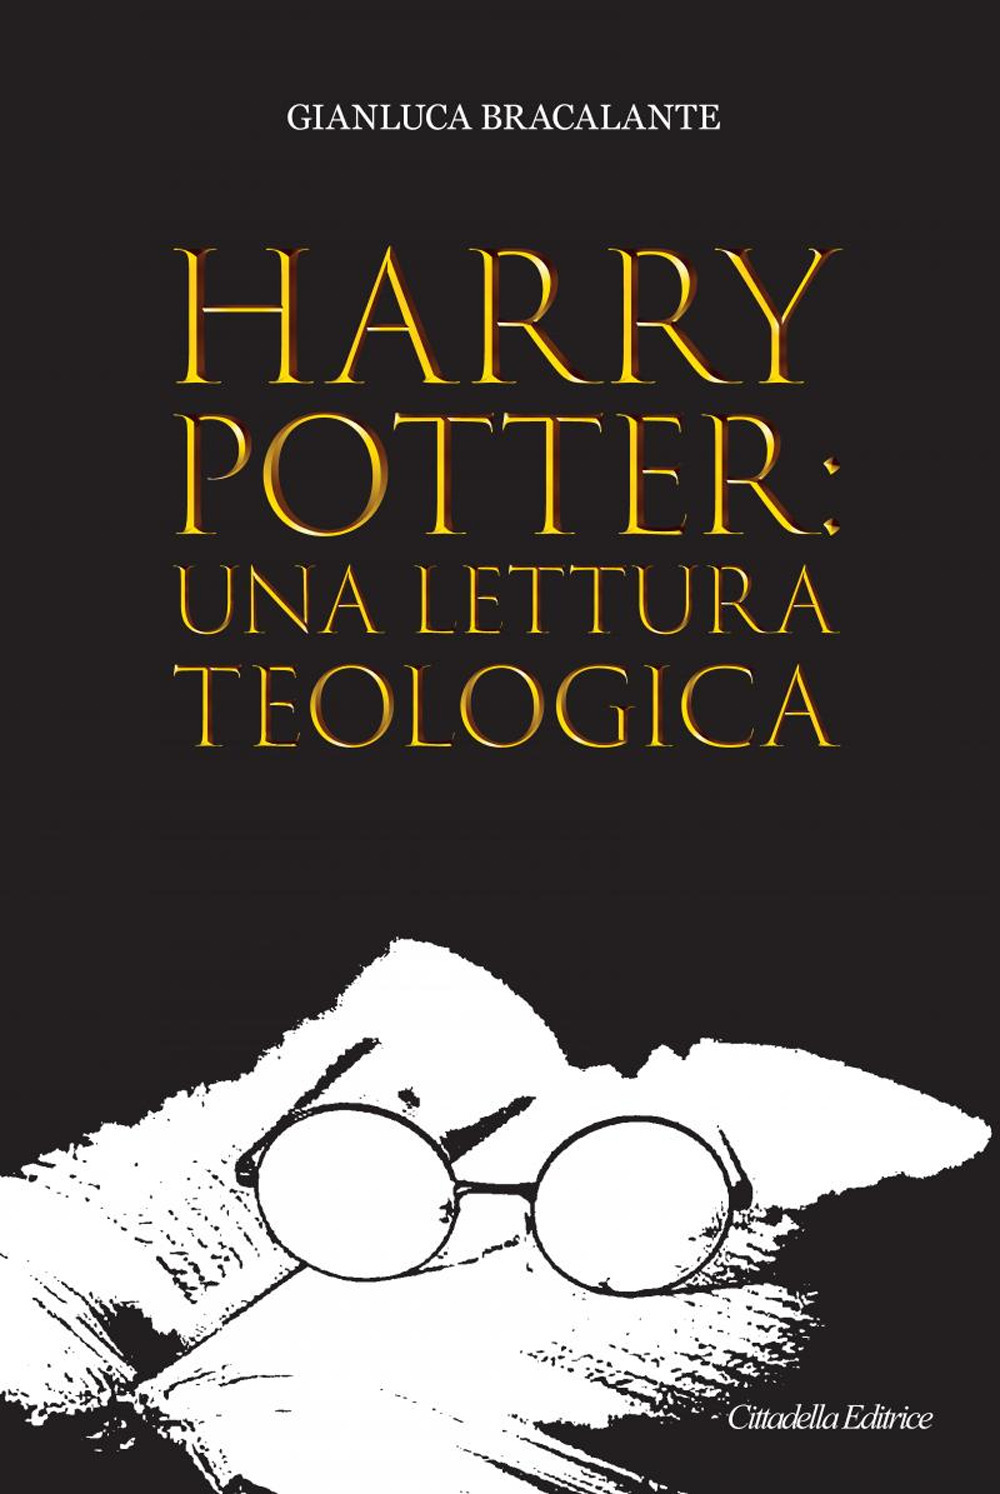 Image of Harry Potter: una lettura teologica